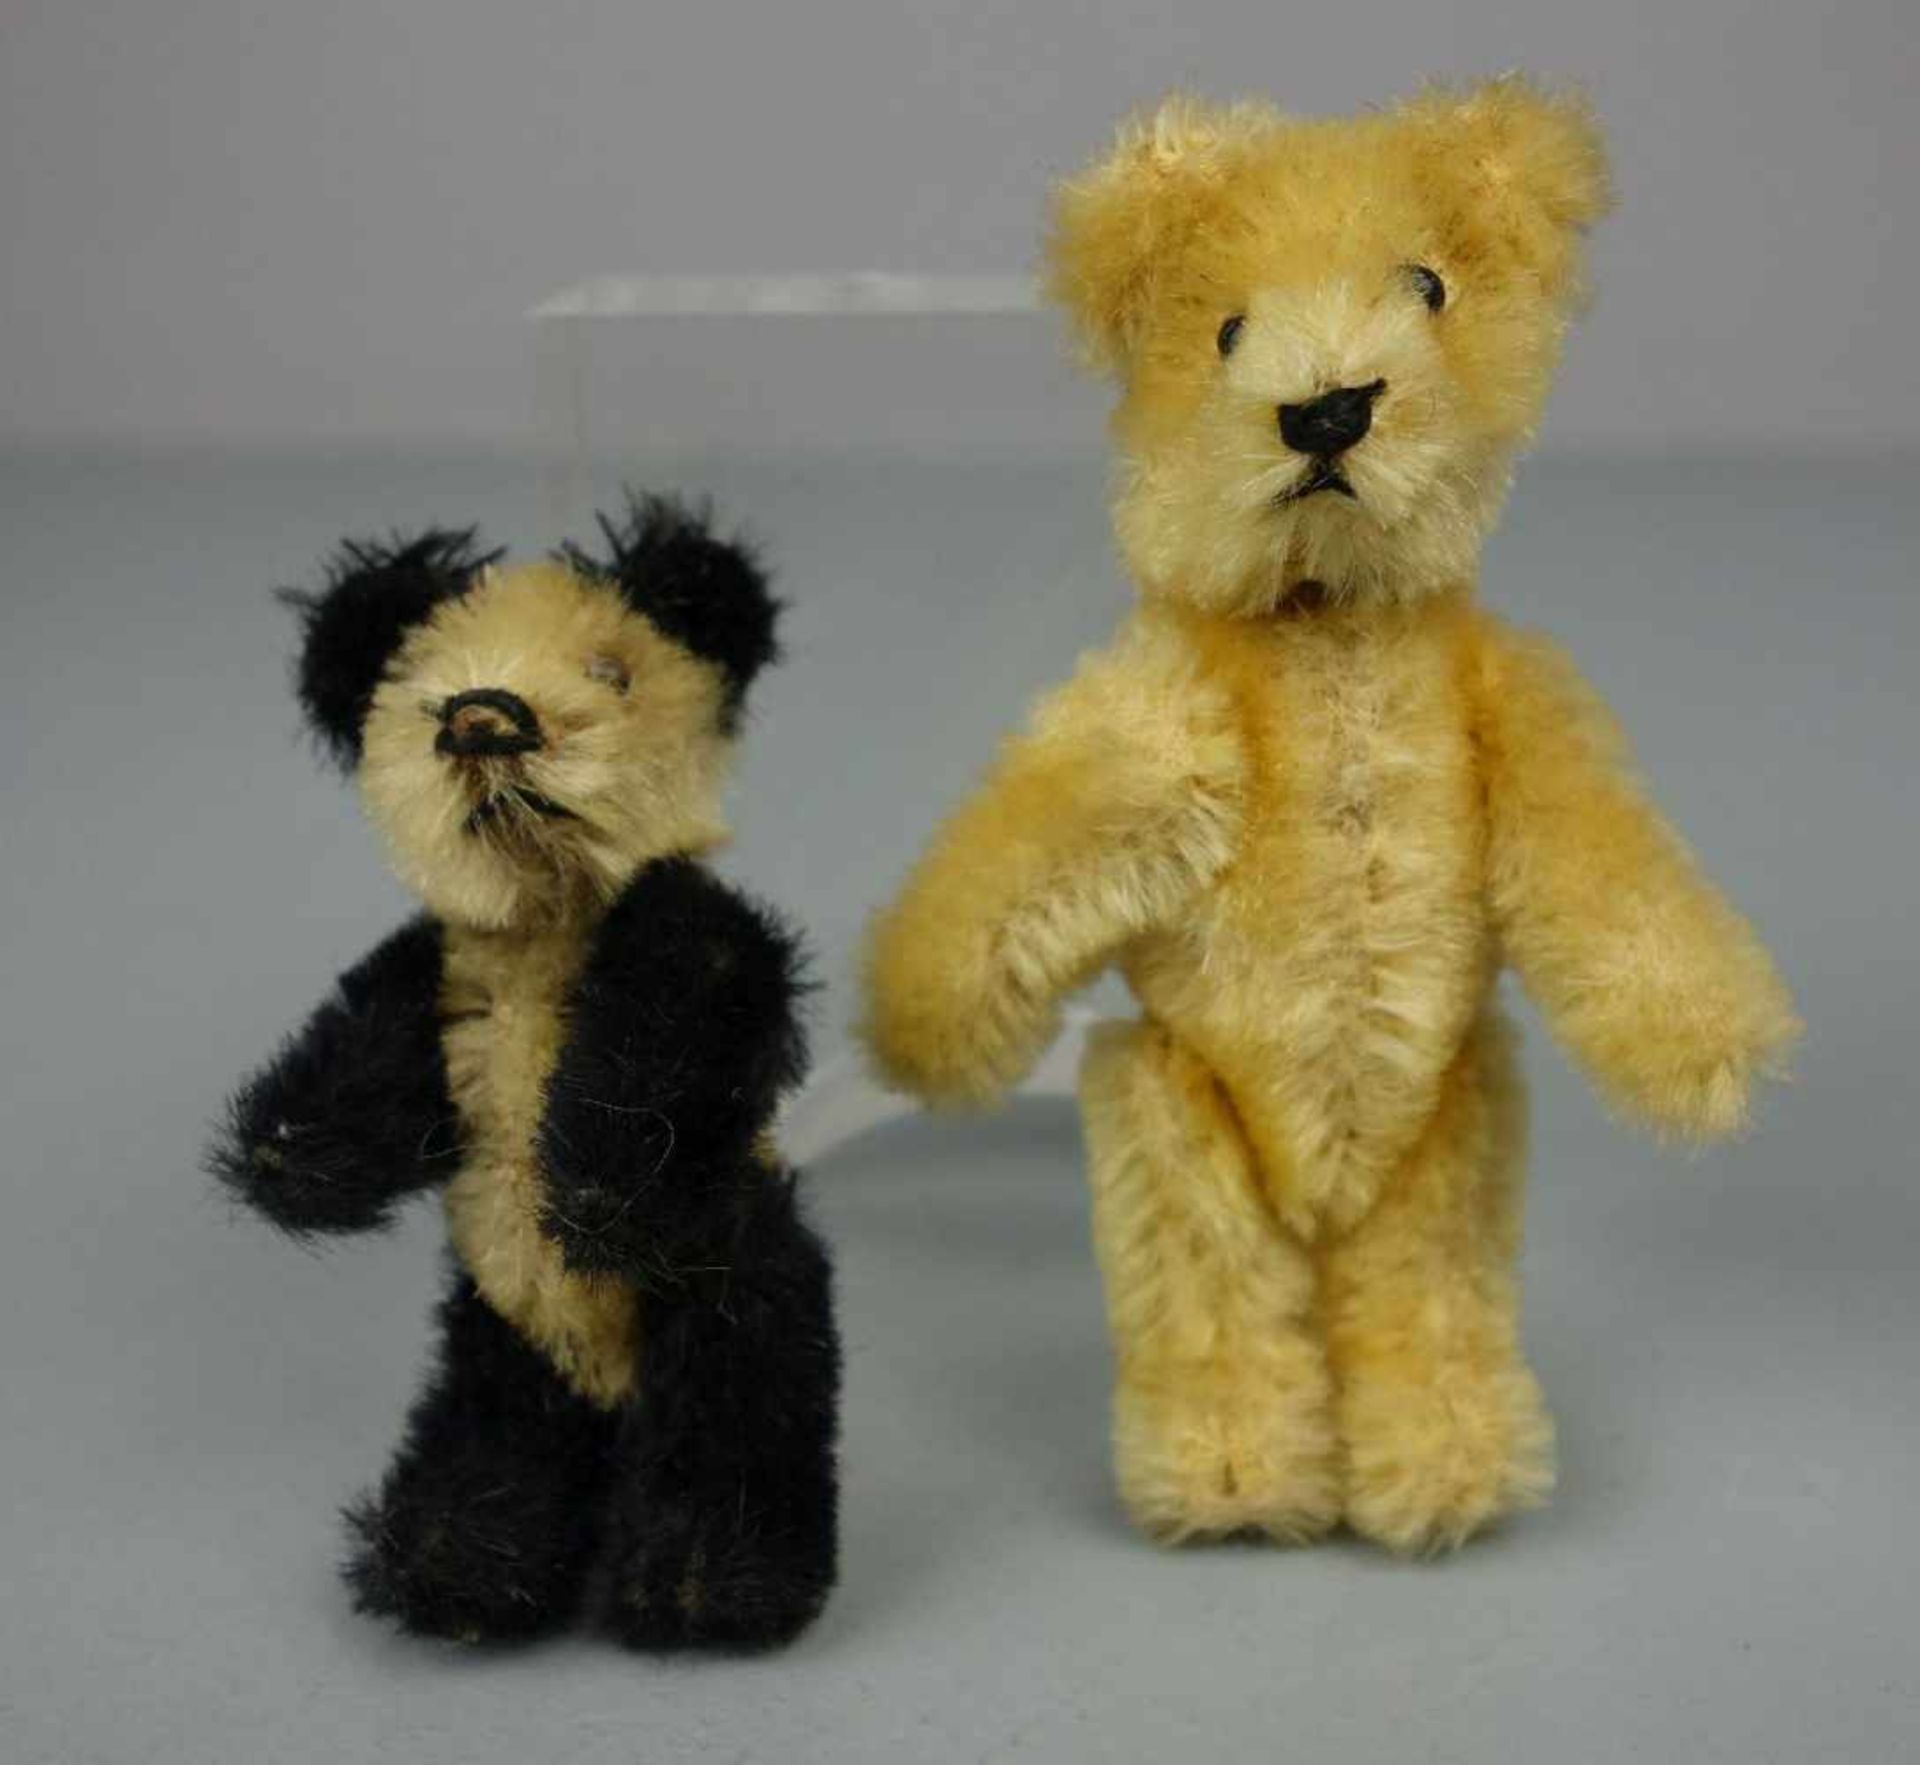 KONVOLUT MINIATUR PLÜSCHFIGUREN: 5 TEDDYBÄREN UND 1 LÖWE / lion and teddy bears, Mitte 20. Jh.; - Image 5 of 8